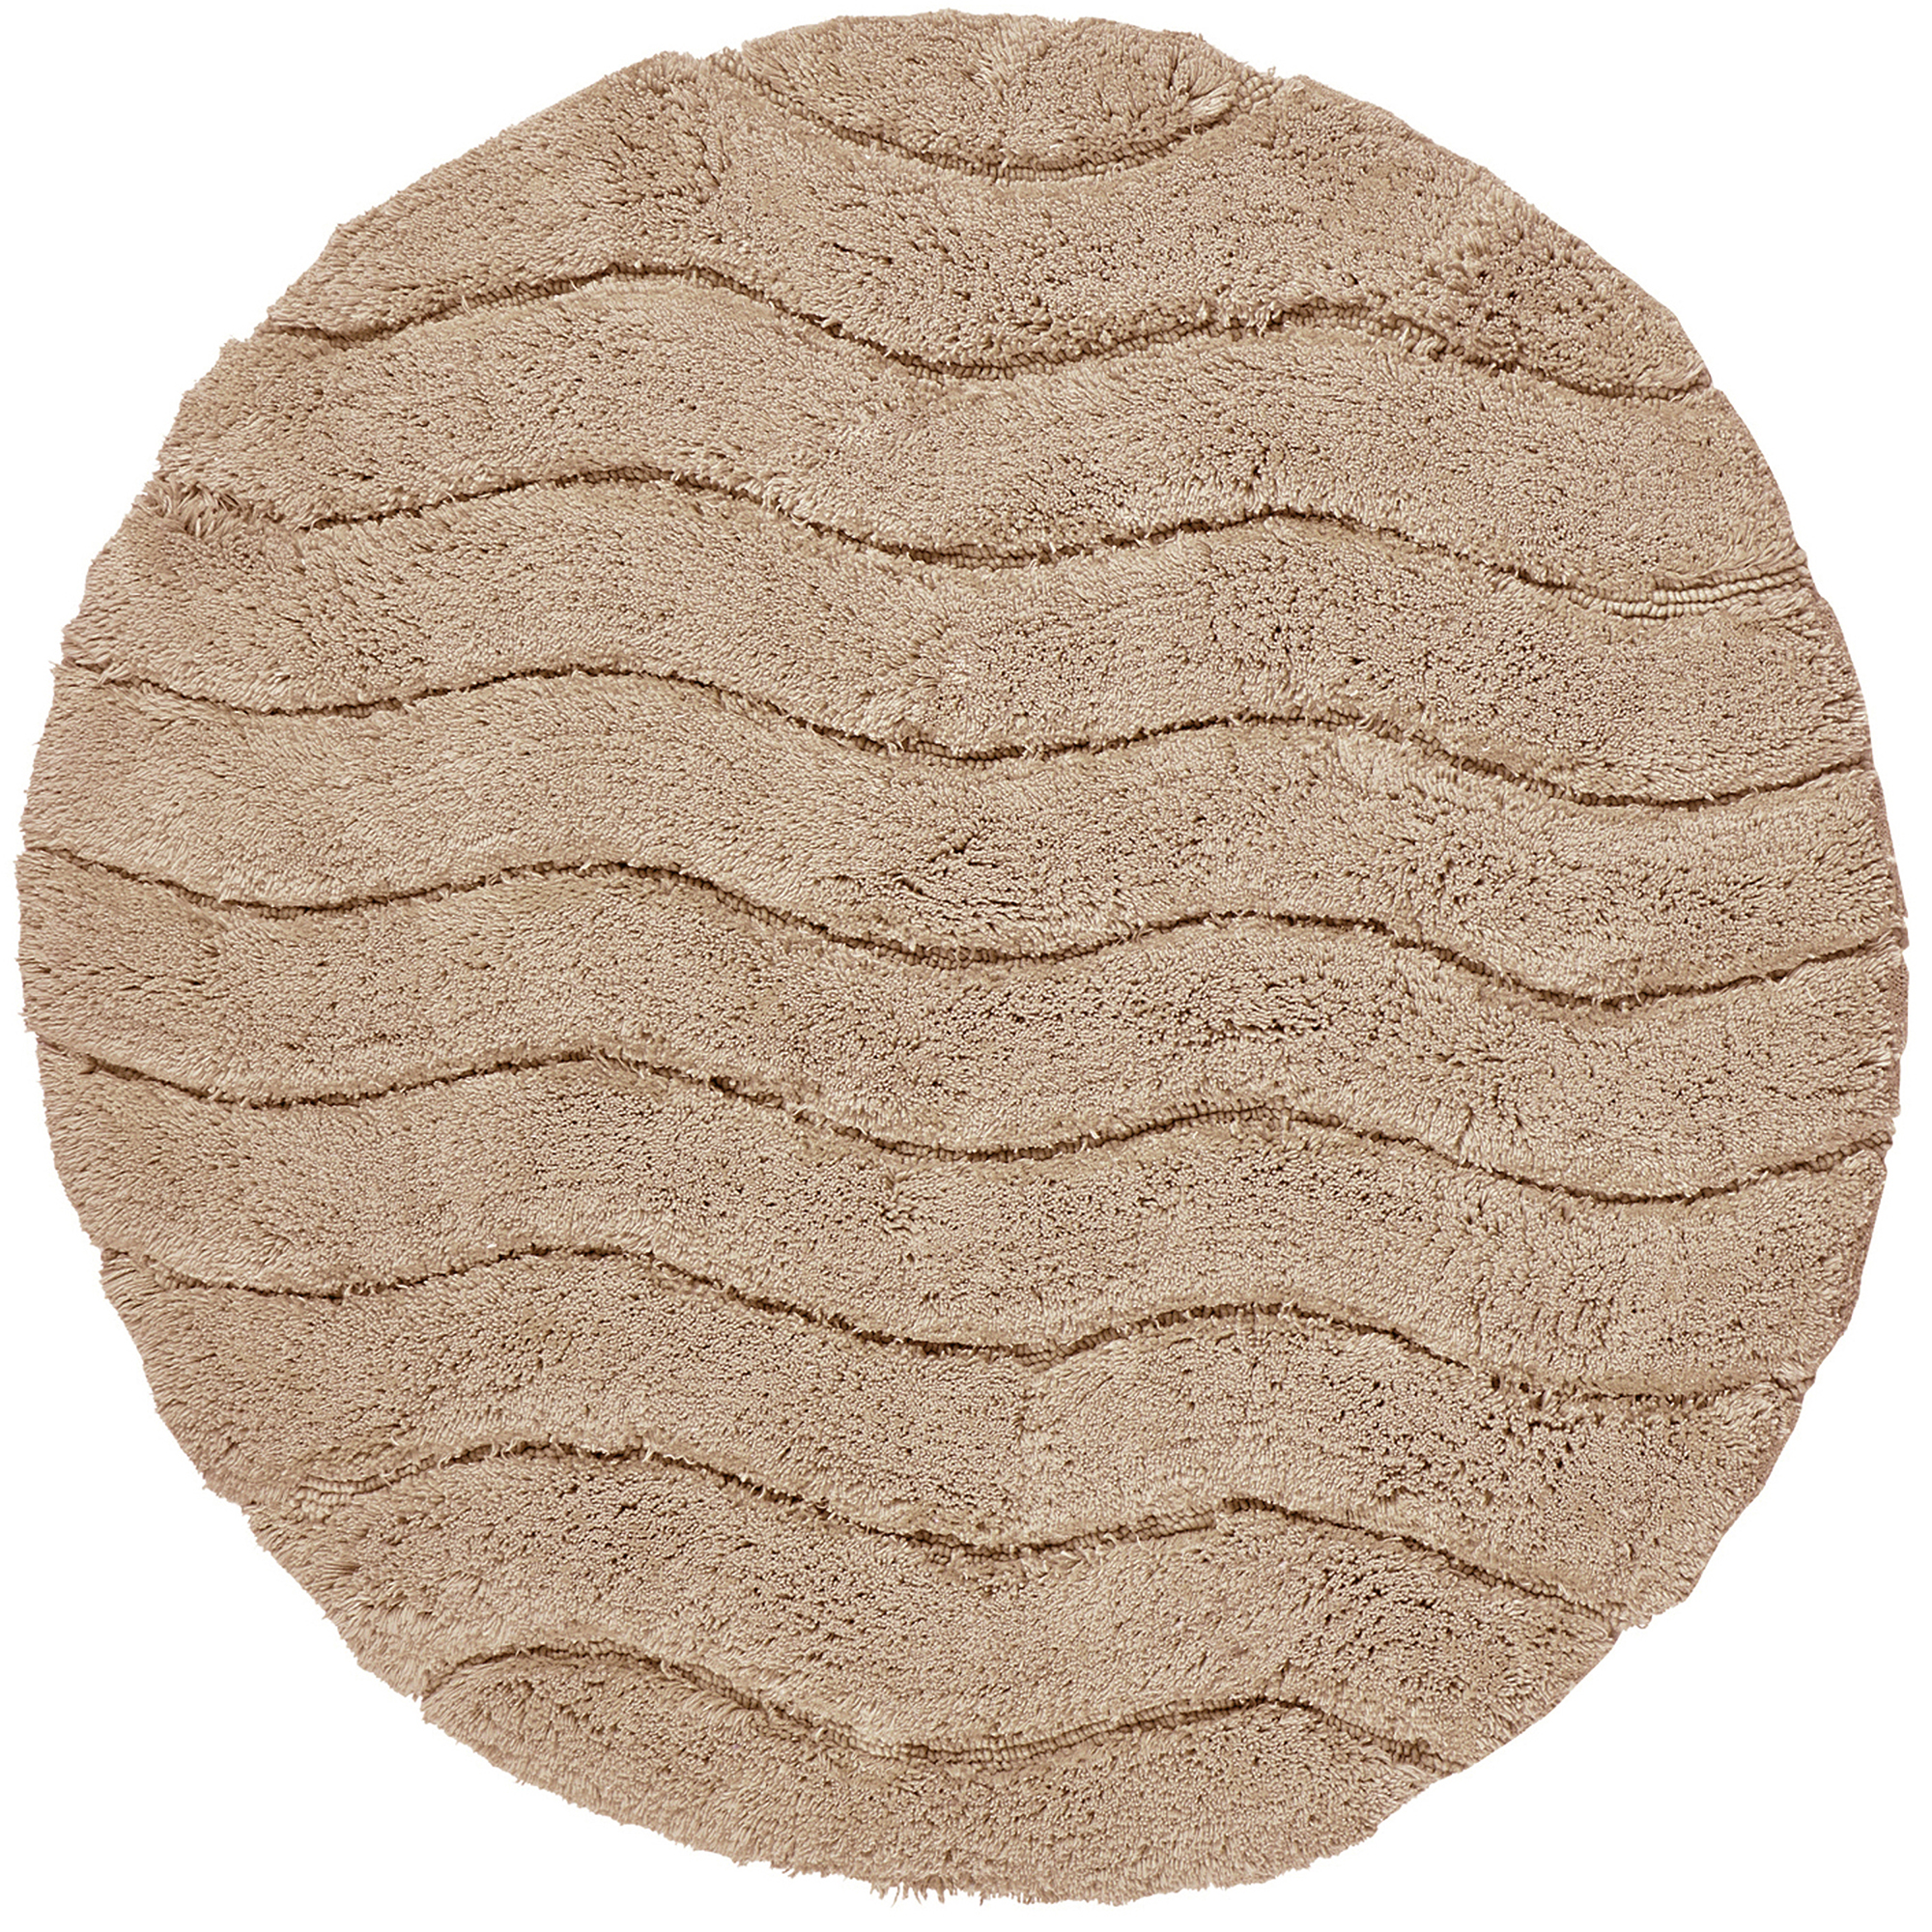 Better Trends Indulgence 100% Cotton 30" Round Bath Rug - Sand - image 5 of 5